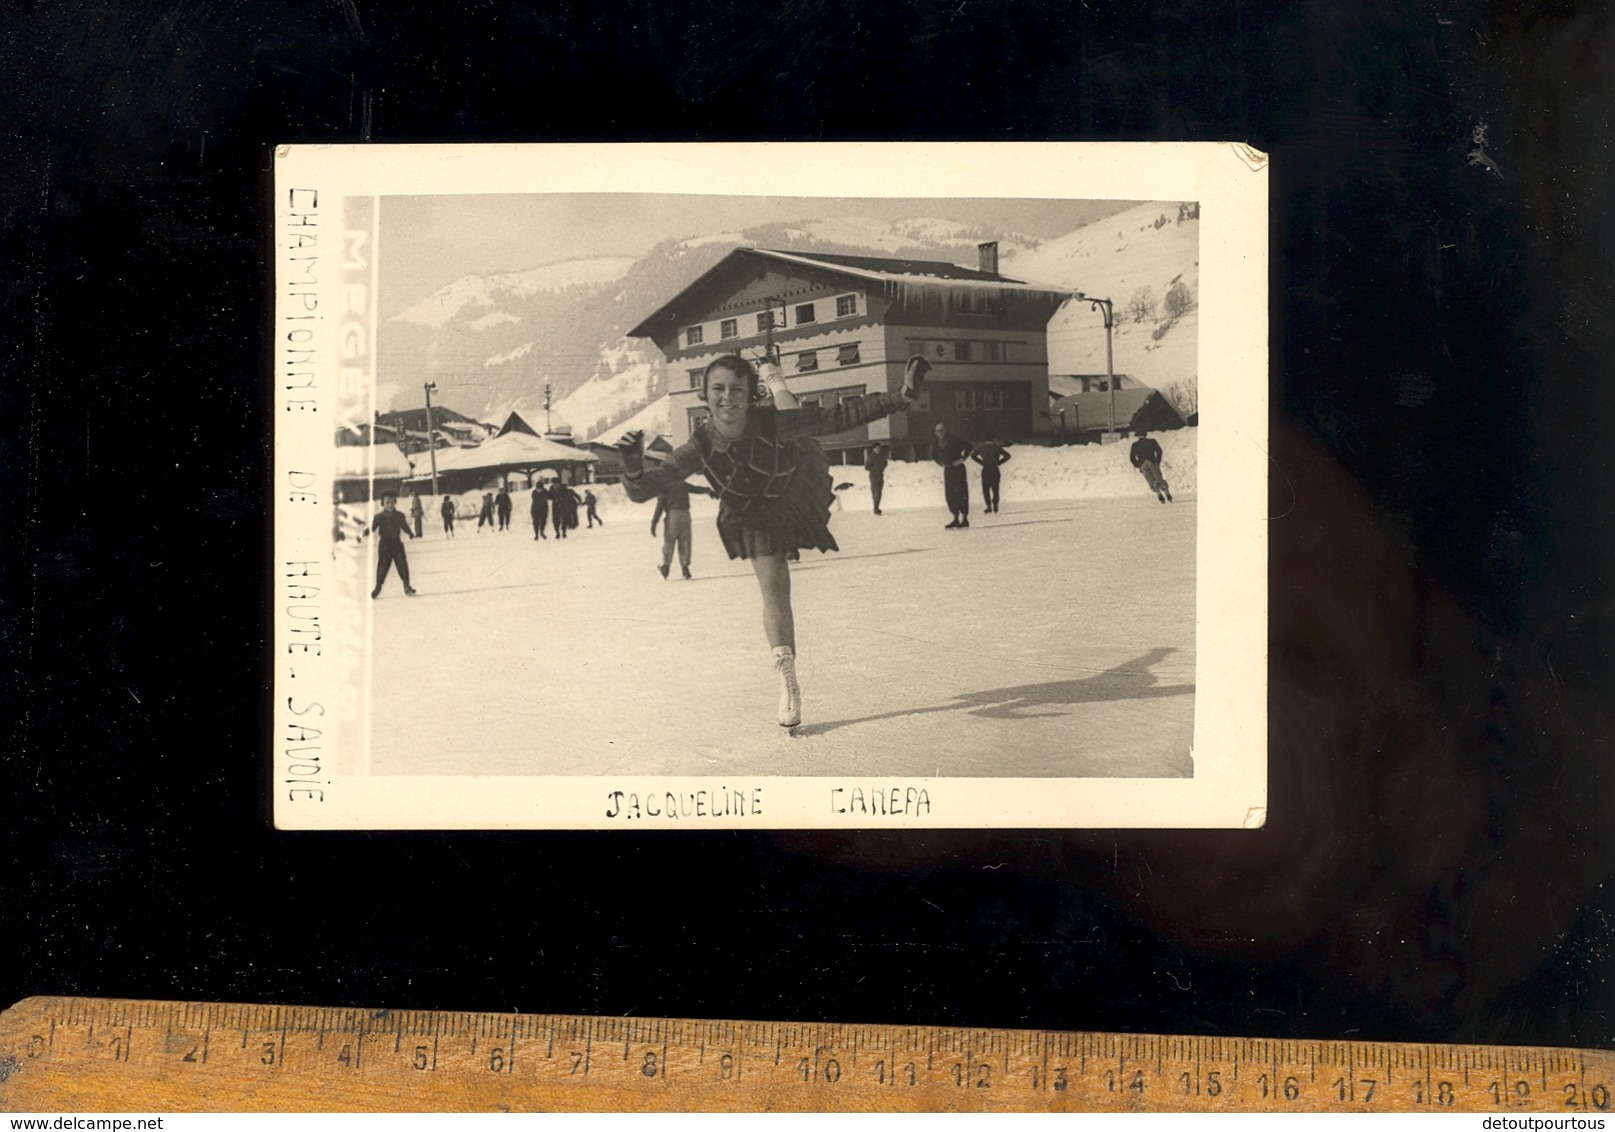 Photo MEGEVE Haute Savoie 74 : Patineuse Jacqueline CANEPA Championne Patin à Glace 1949 Patinoire Patineuse Ice Skating - Megève